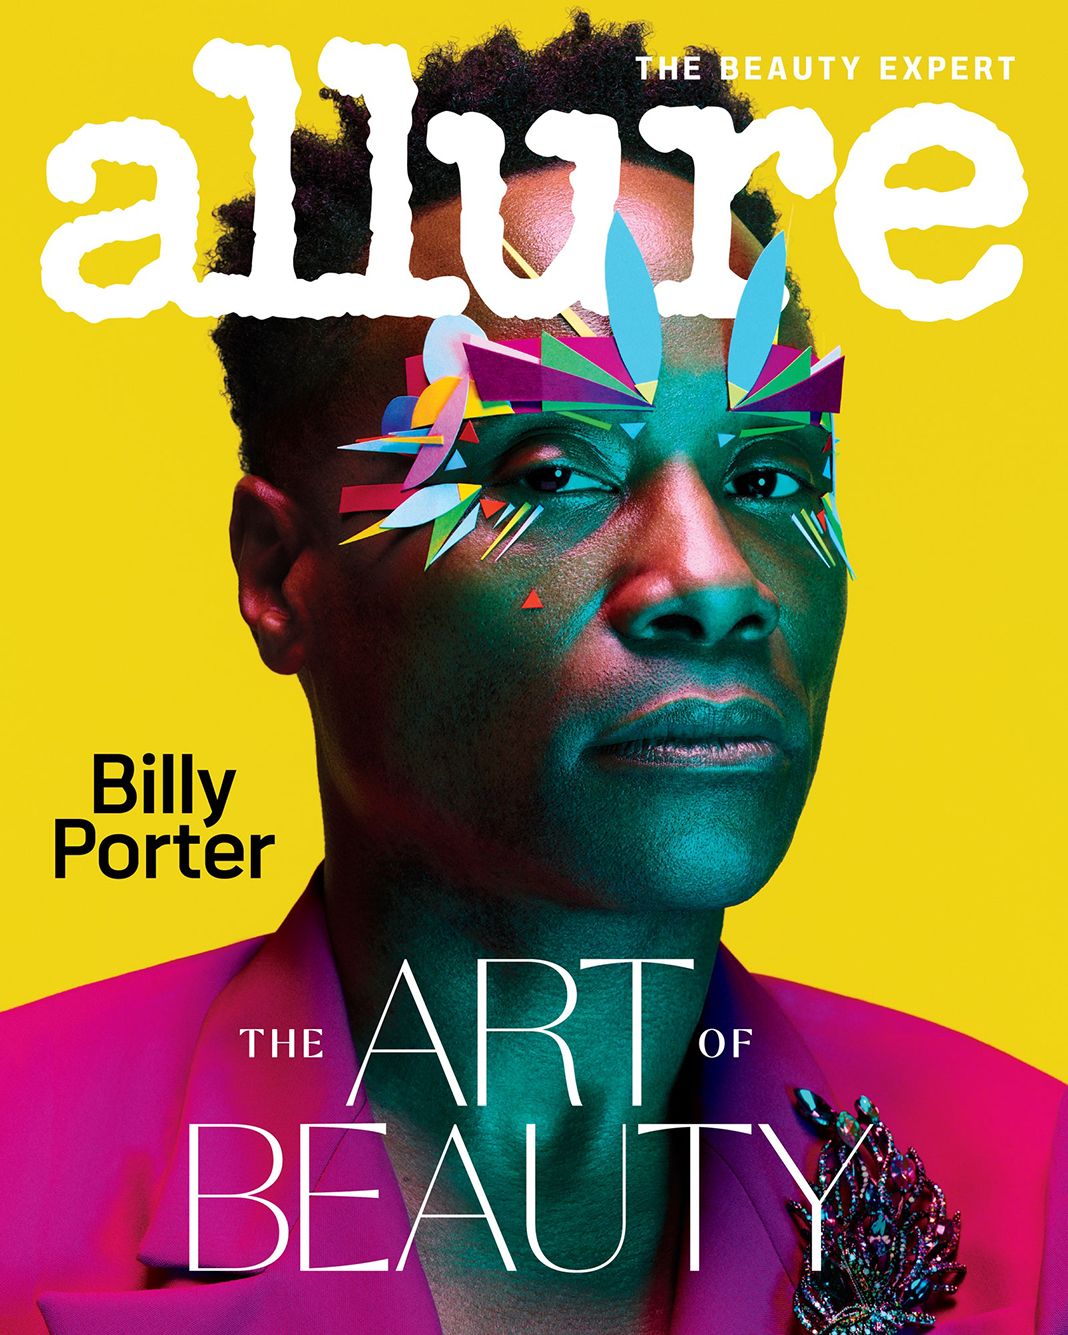 Билли Портер на обложке журнала Allure